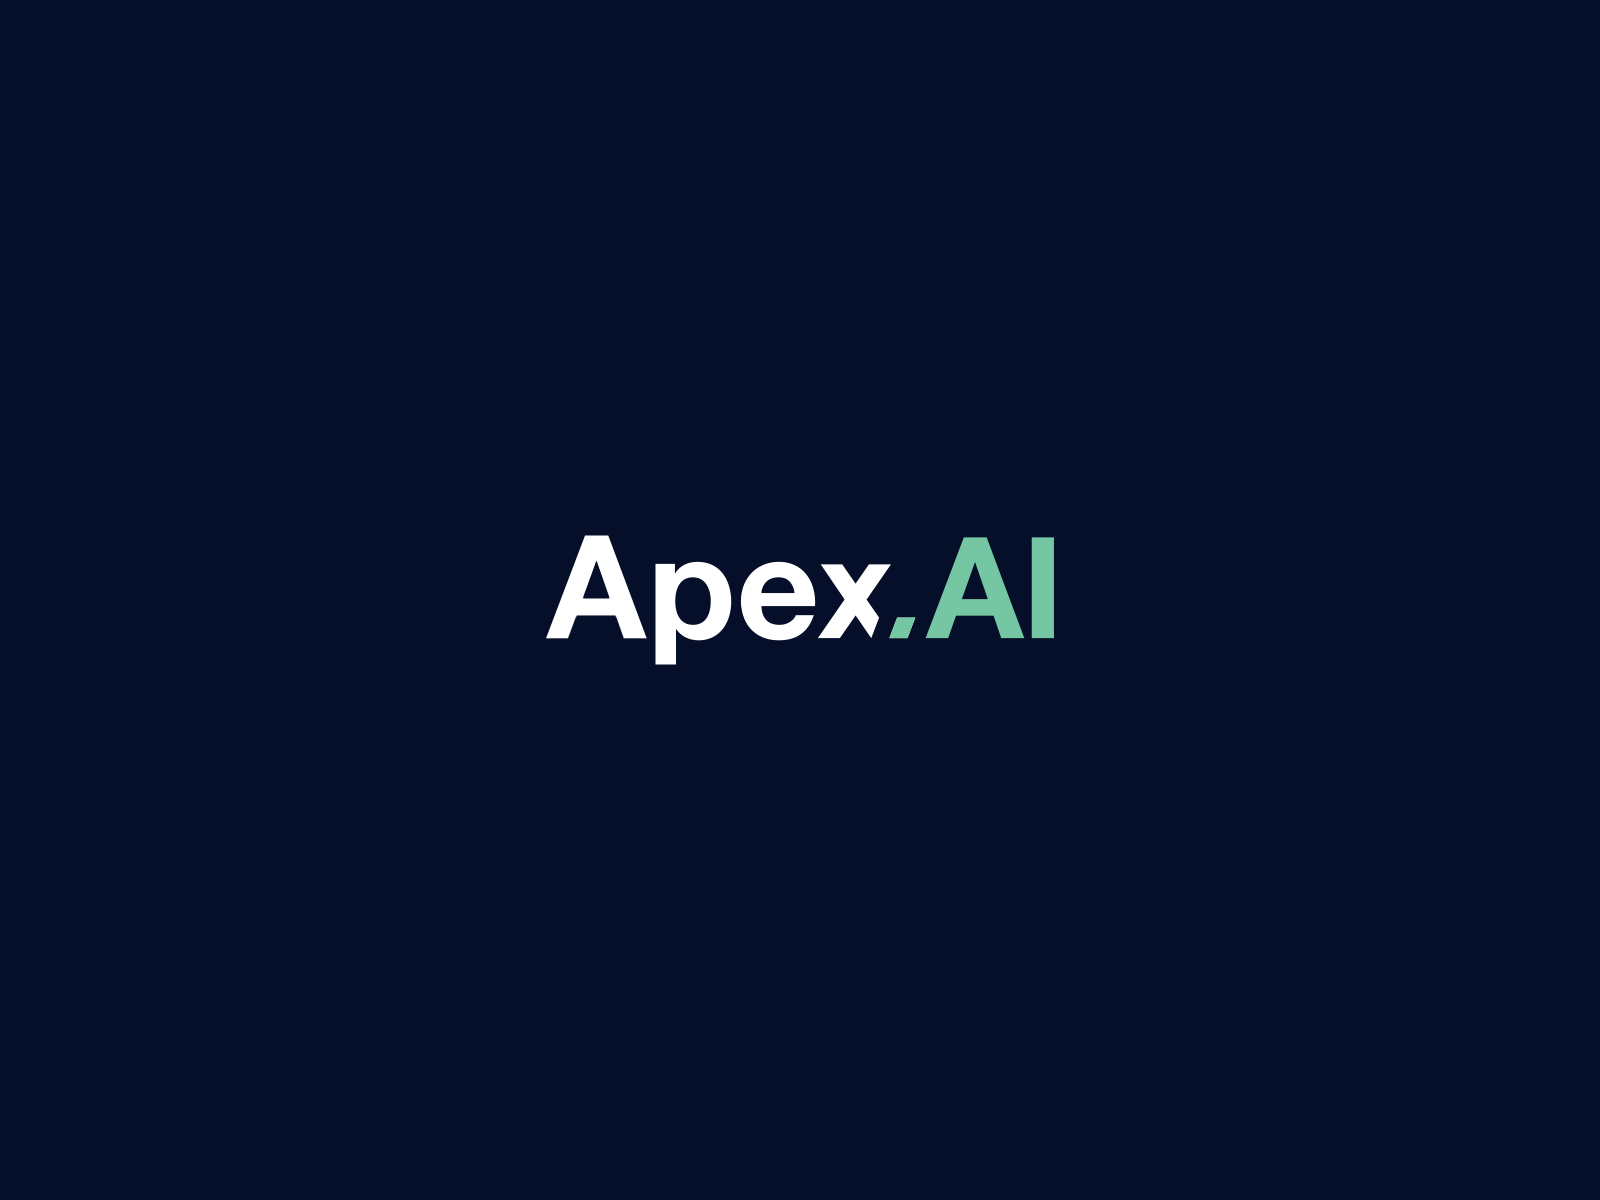 Apex.AI logo animation animation logo animation logo resolve motion graphics